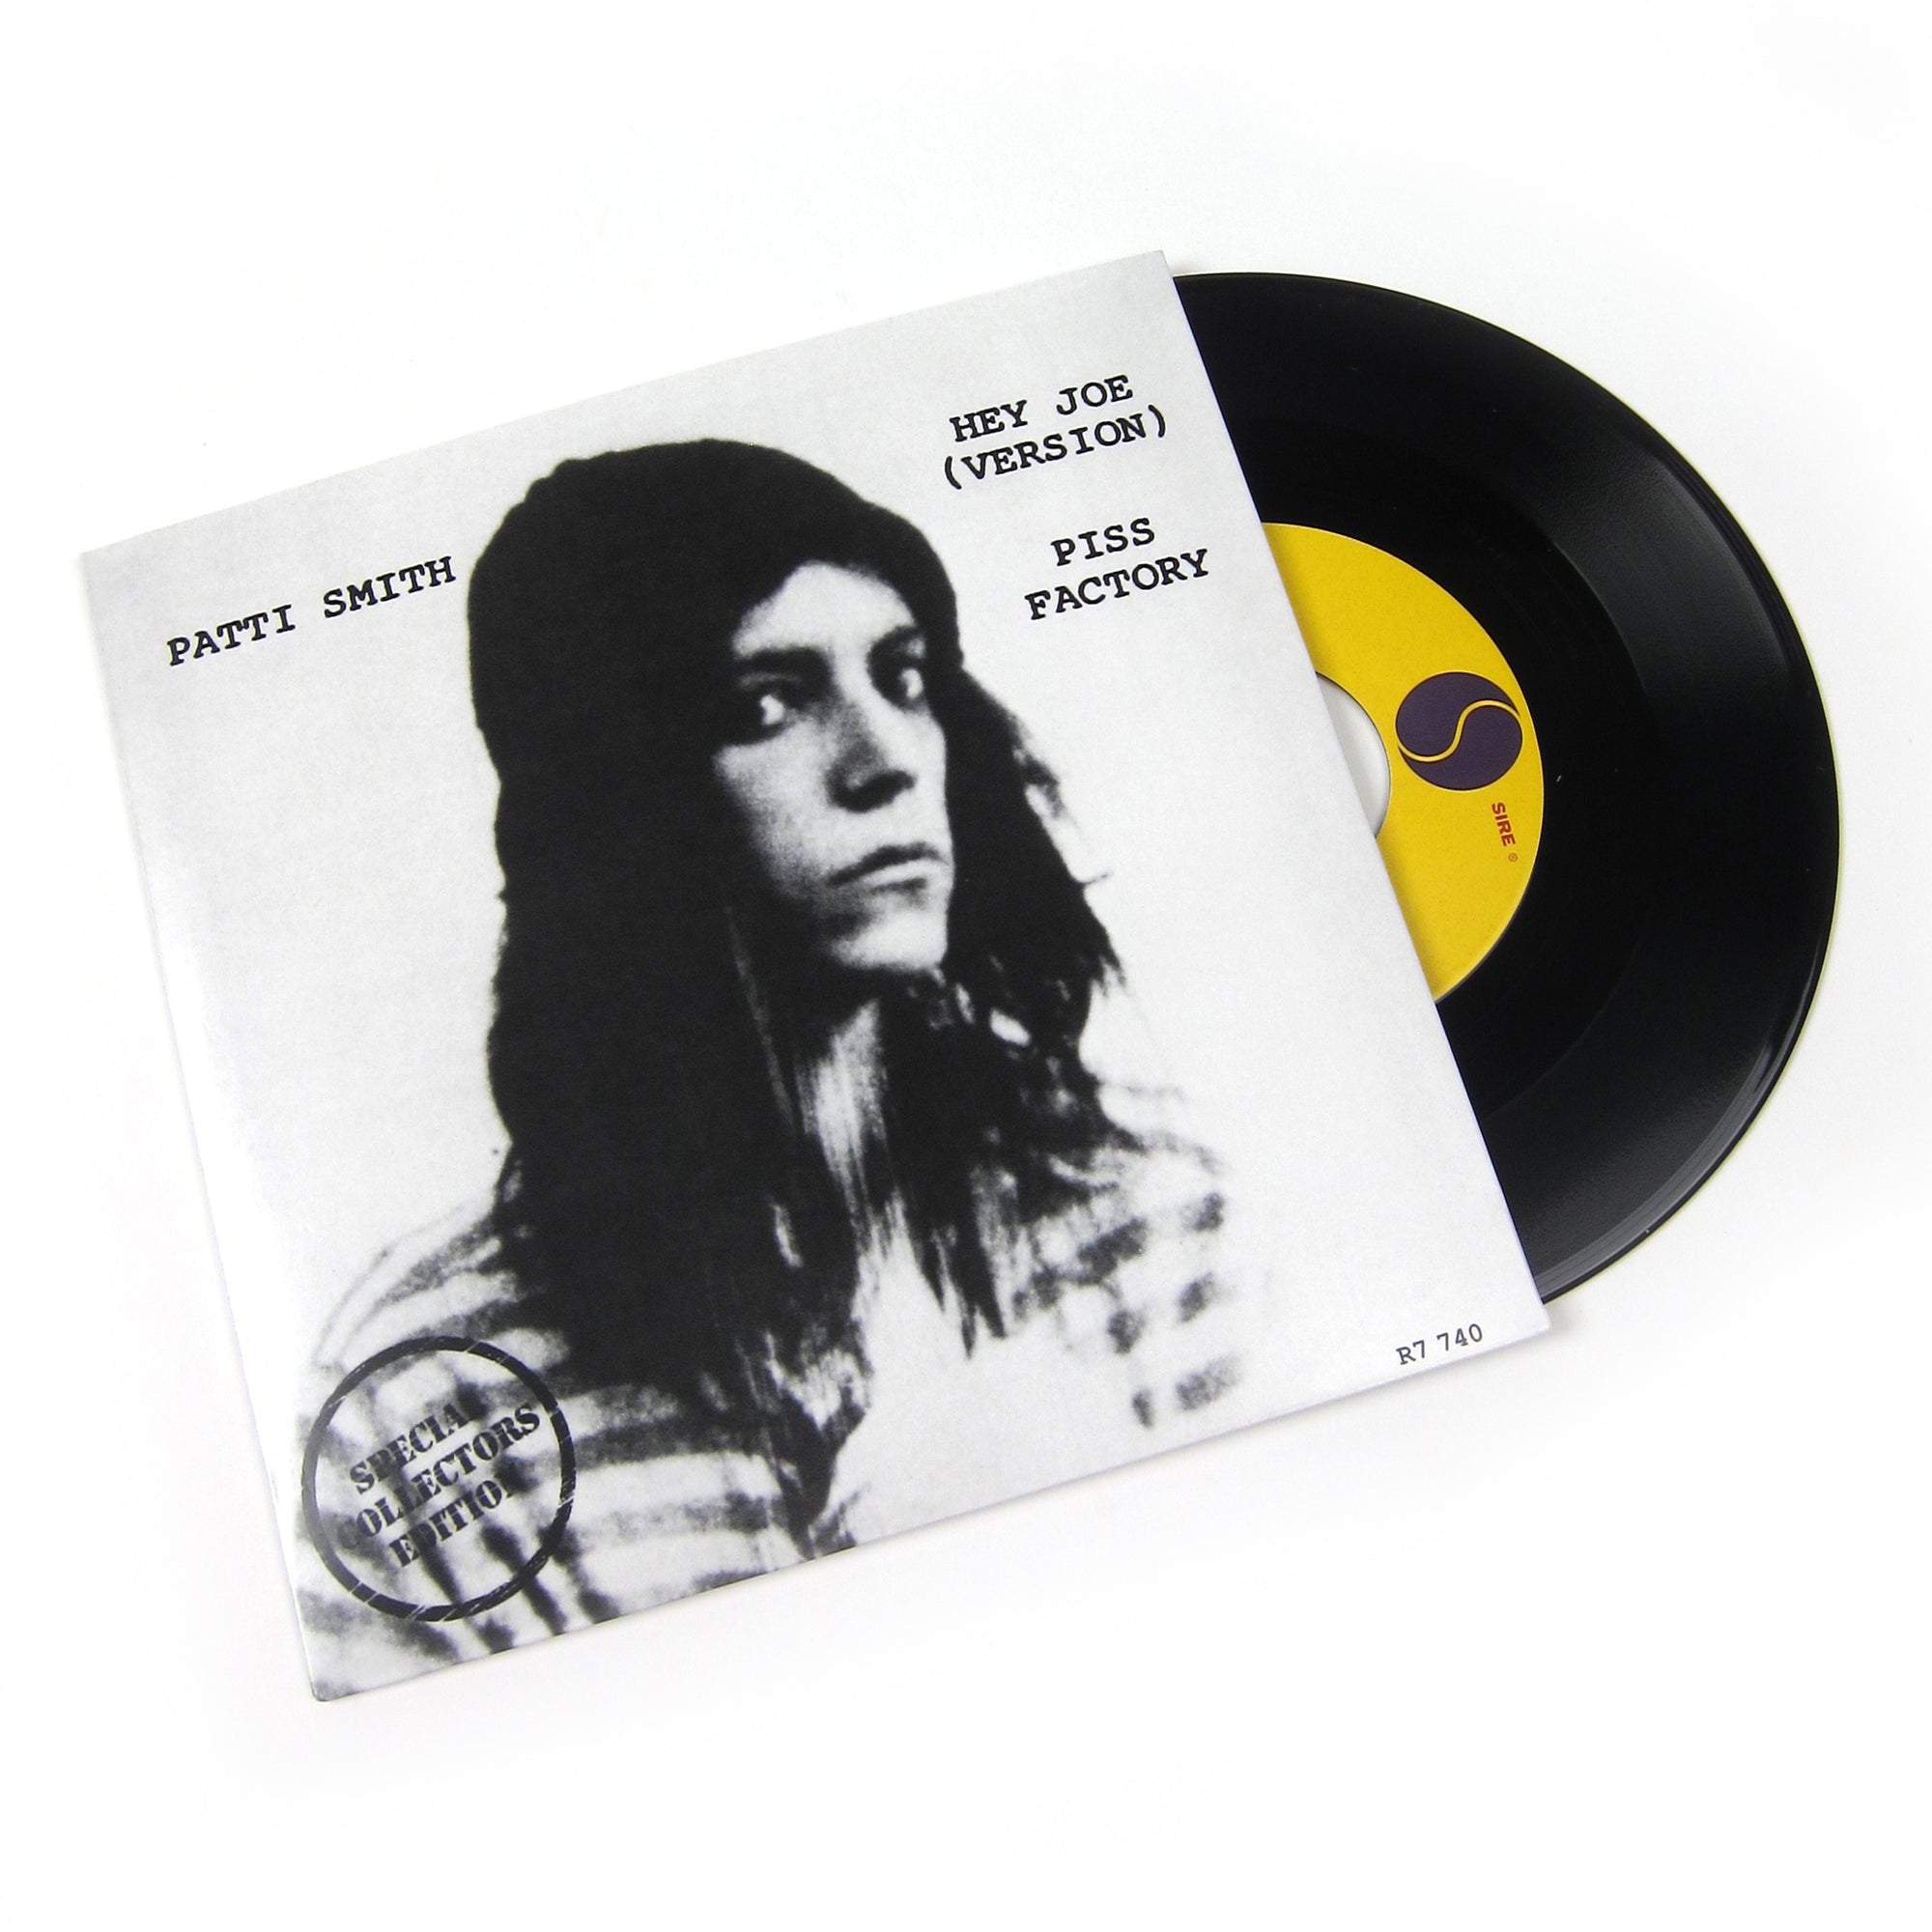 Patti Smith: Hey Joe / Piss Factory Vinyl 7